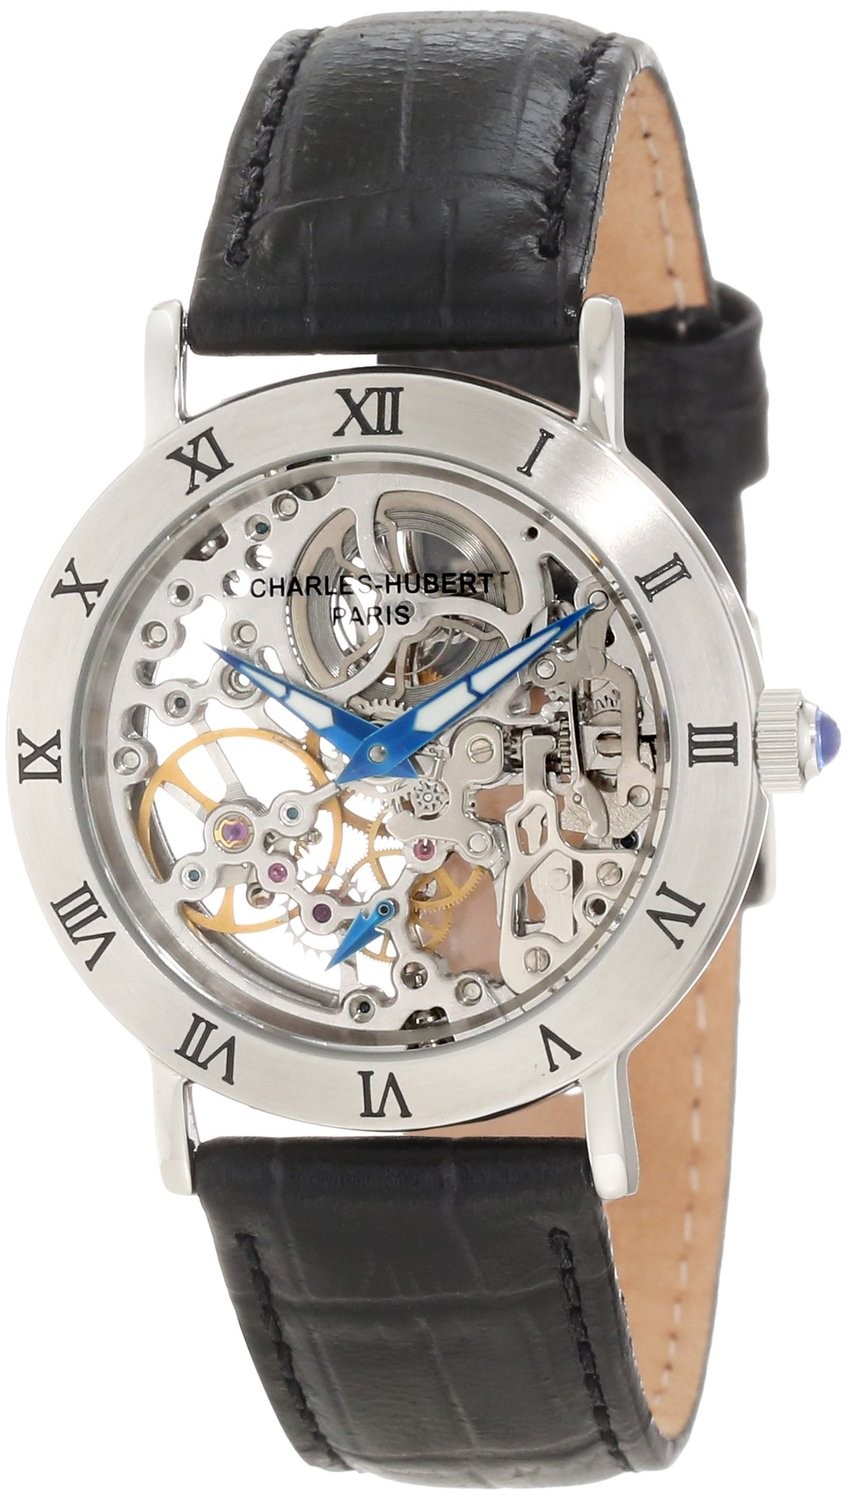 Charles-Hubert Paris Women's Stainless Steel Mechanical Watch